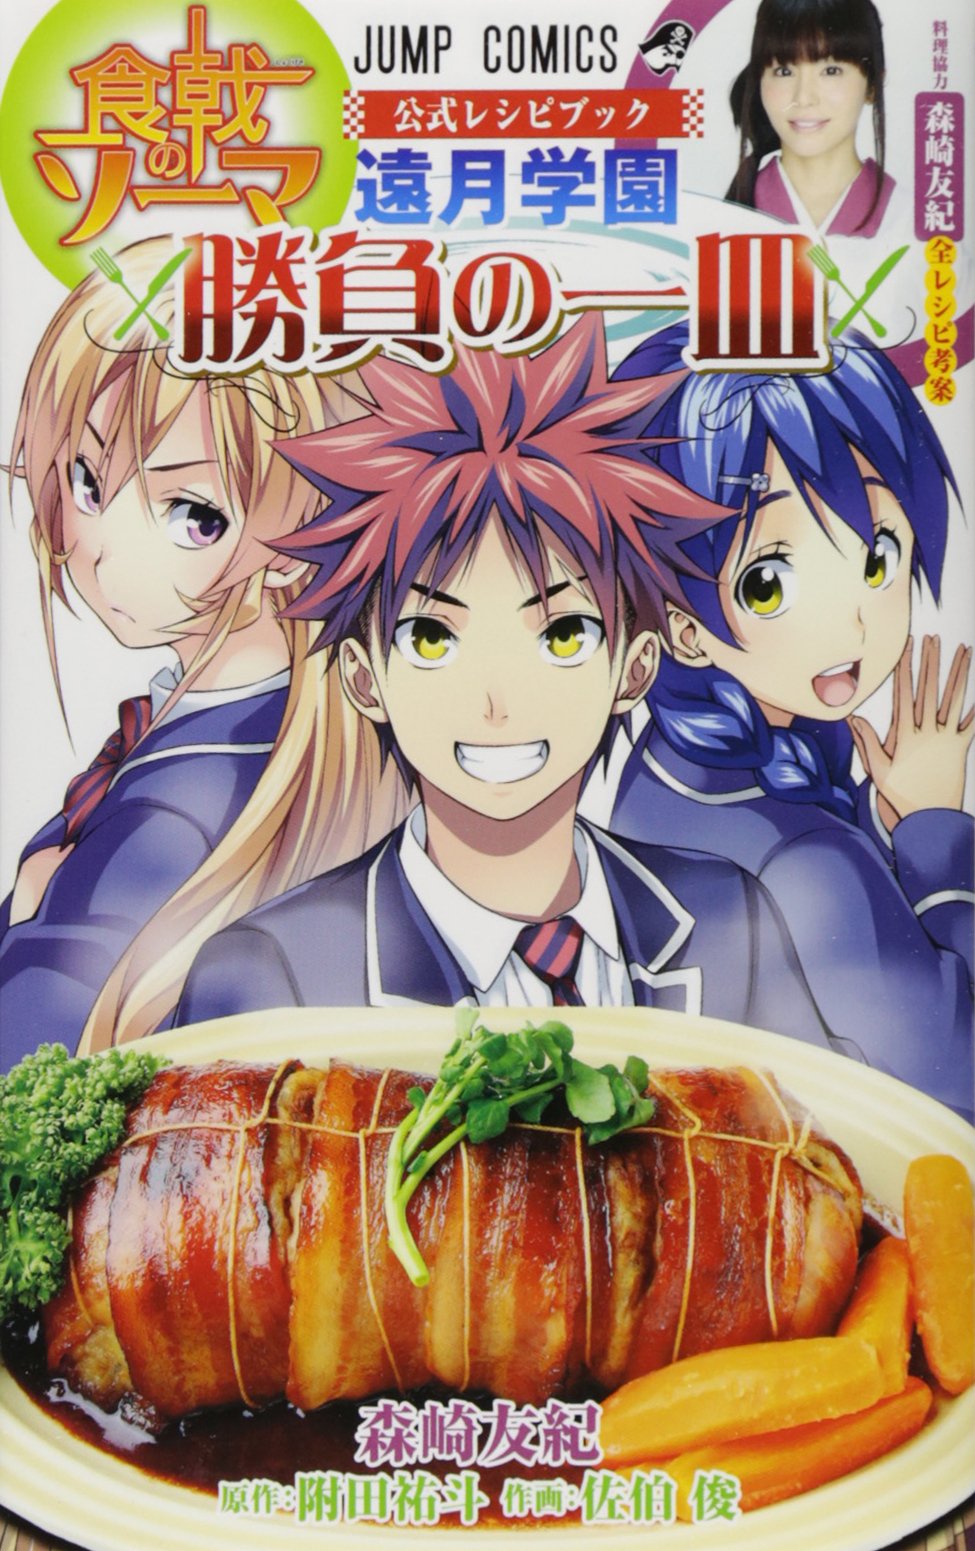 𝘧𝘰𝘰𝘥 𝘸𝘢𝘳𝘴 𝘪𝘤𝘰𝘯 | Anime, Food wars, Aesthetic anime